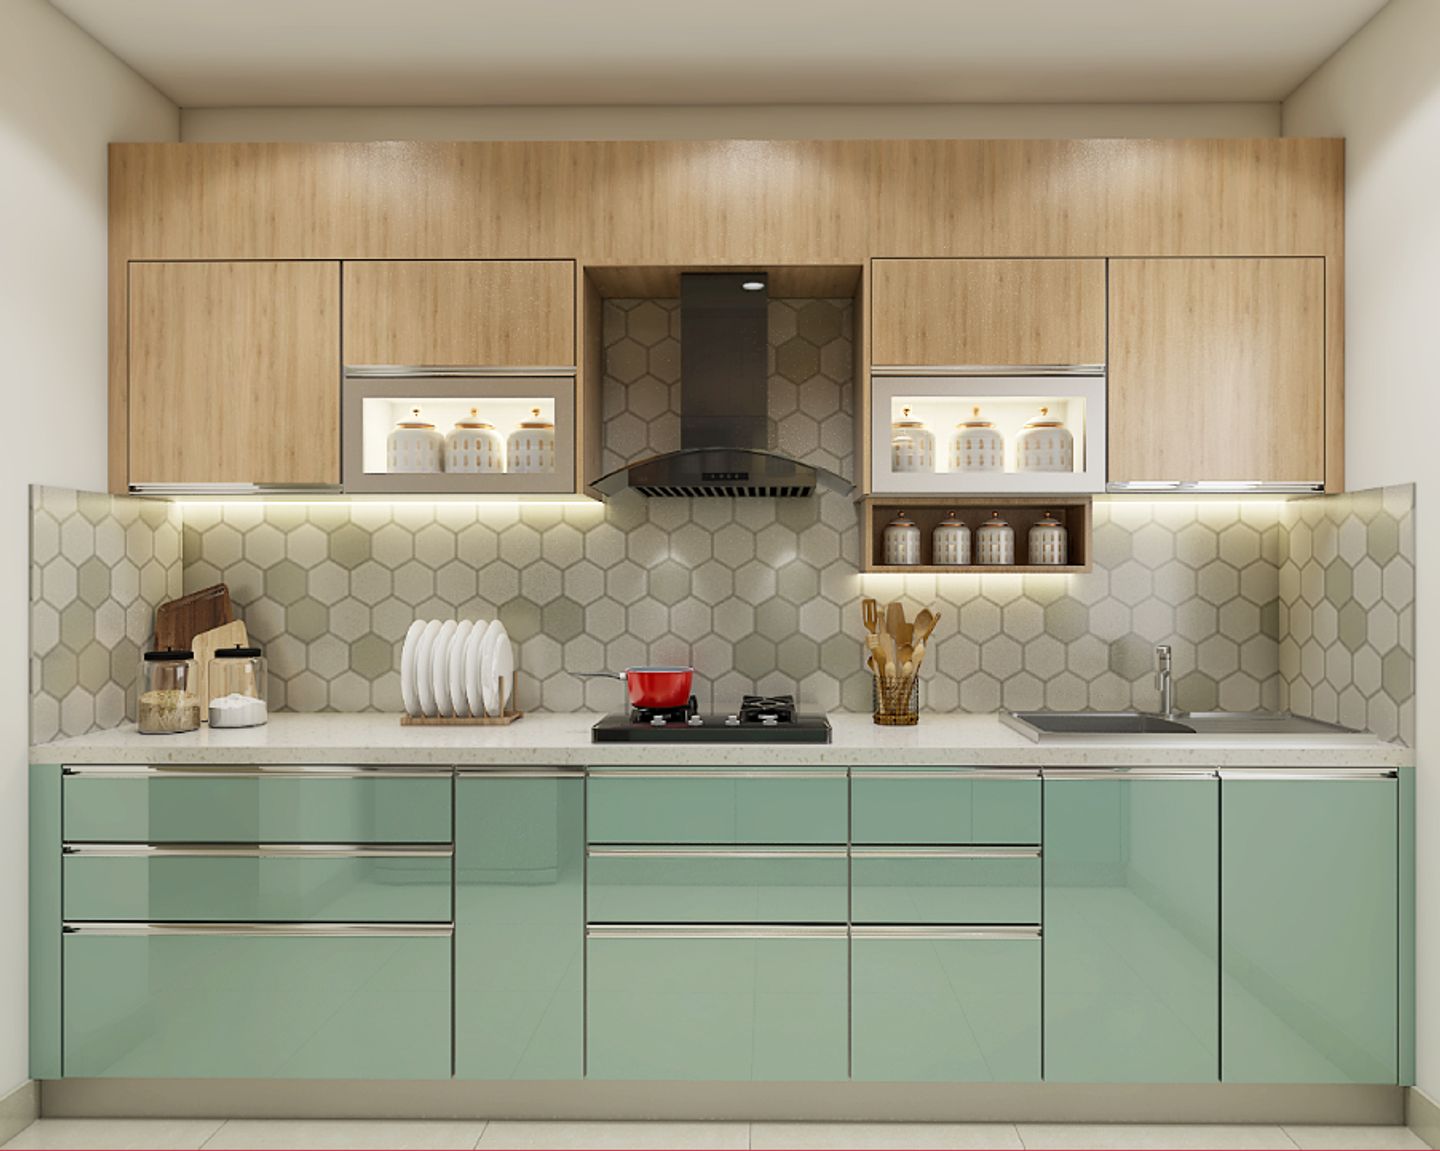 10X8 Ft Parallel Kitchen Design With Blue Cabients - Livspace